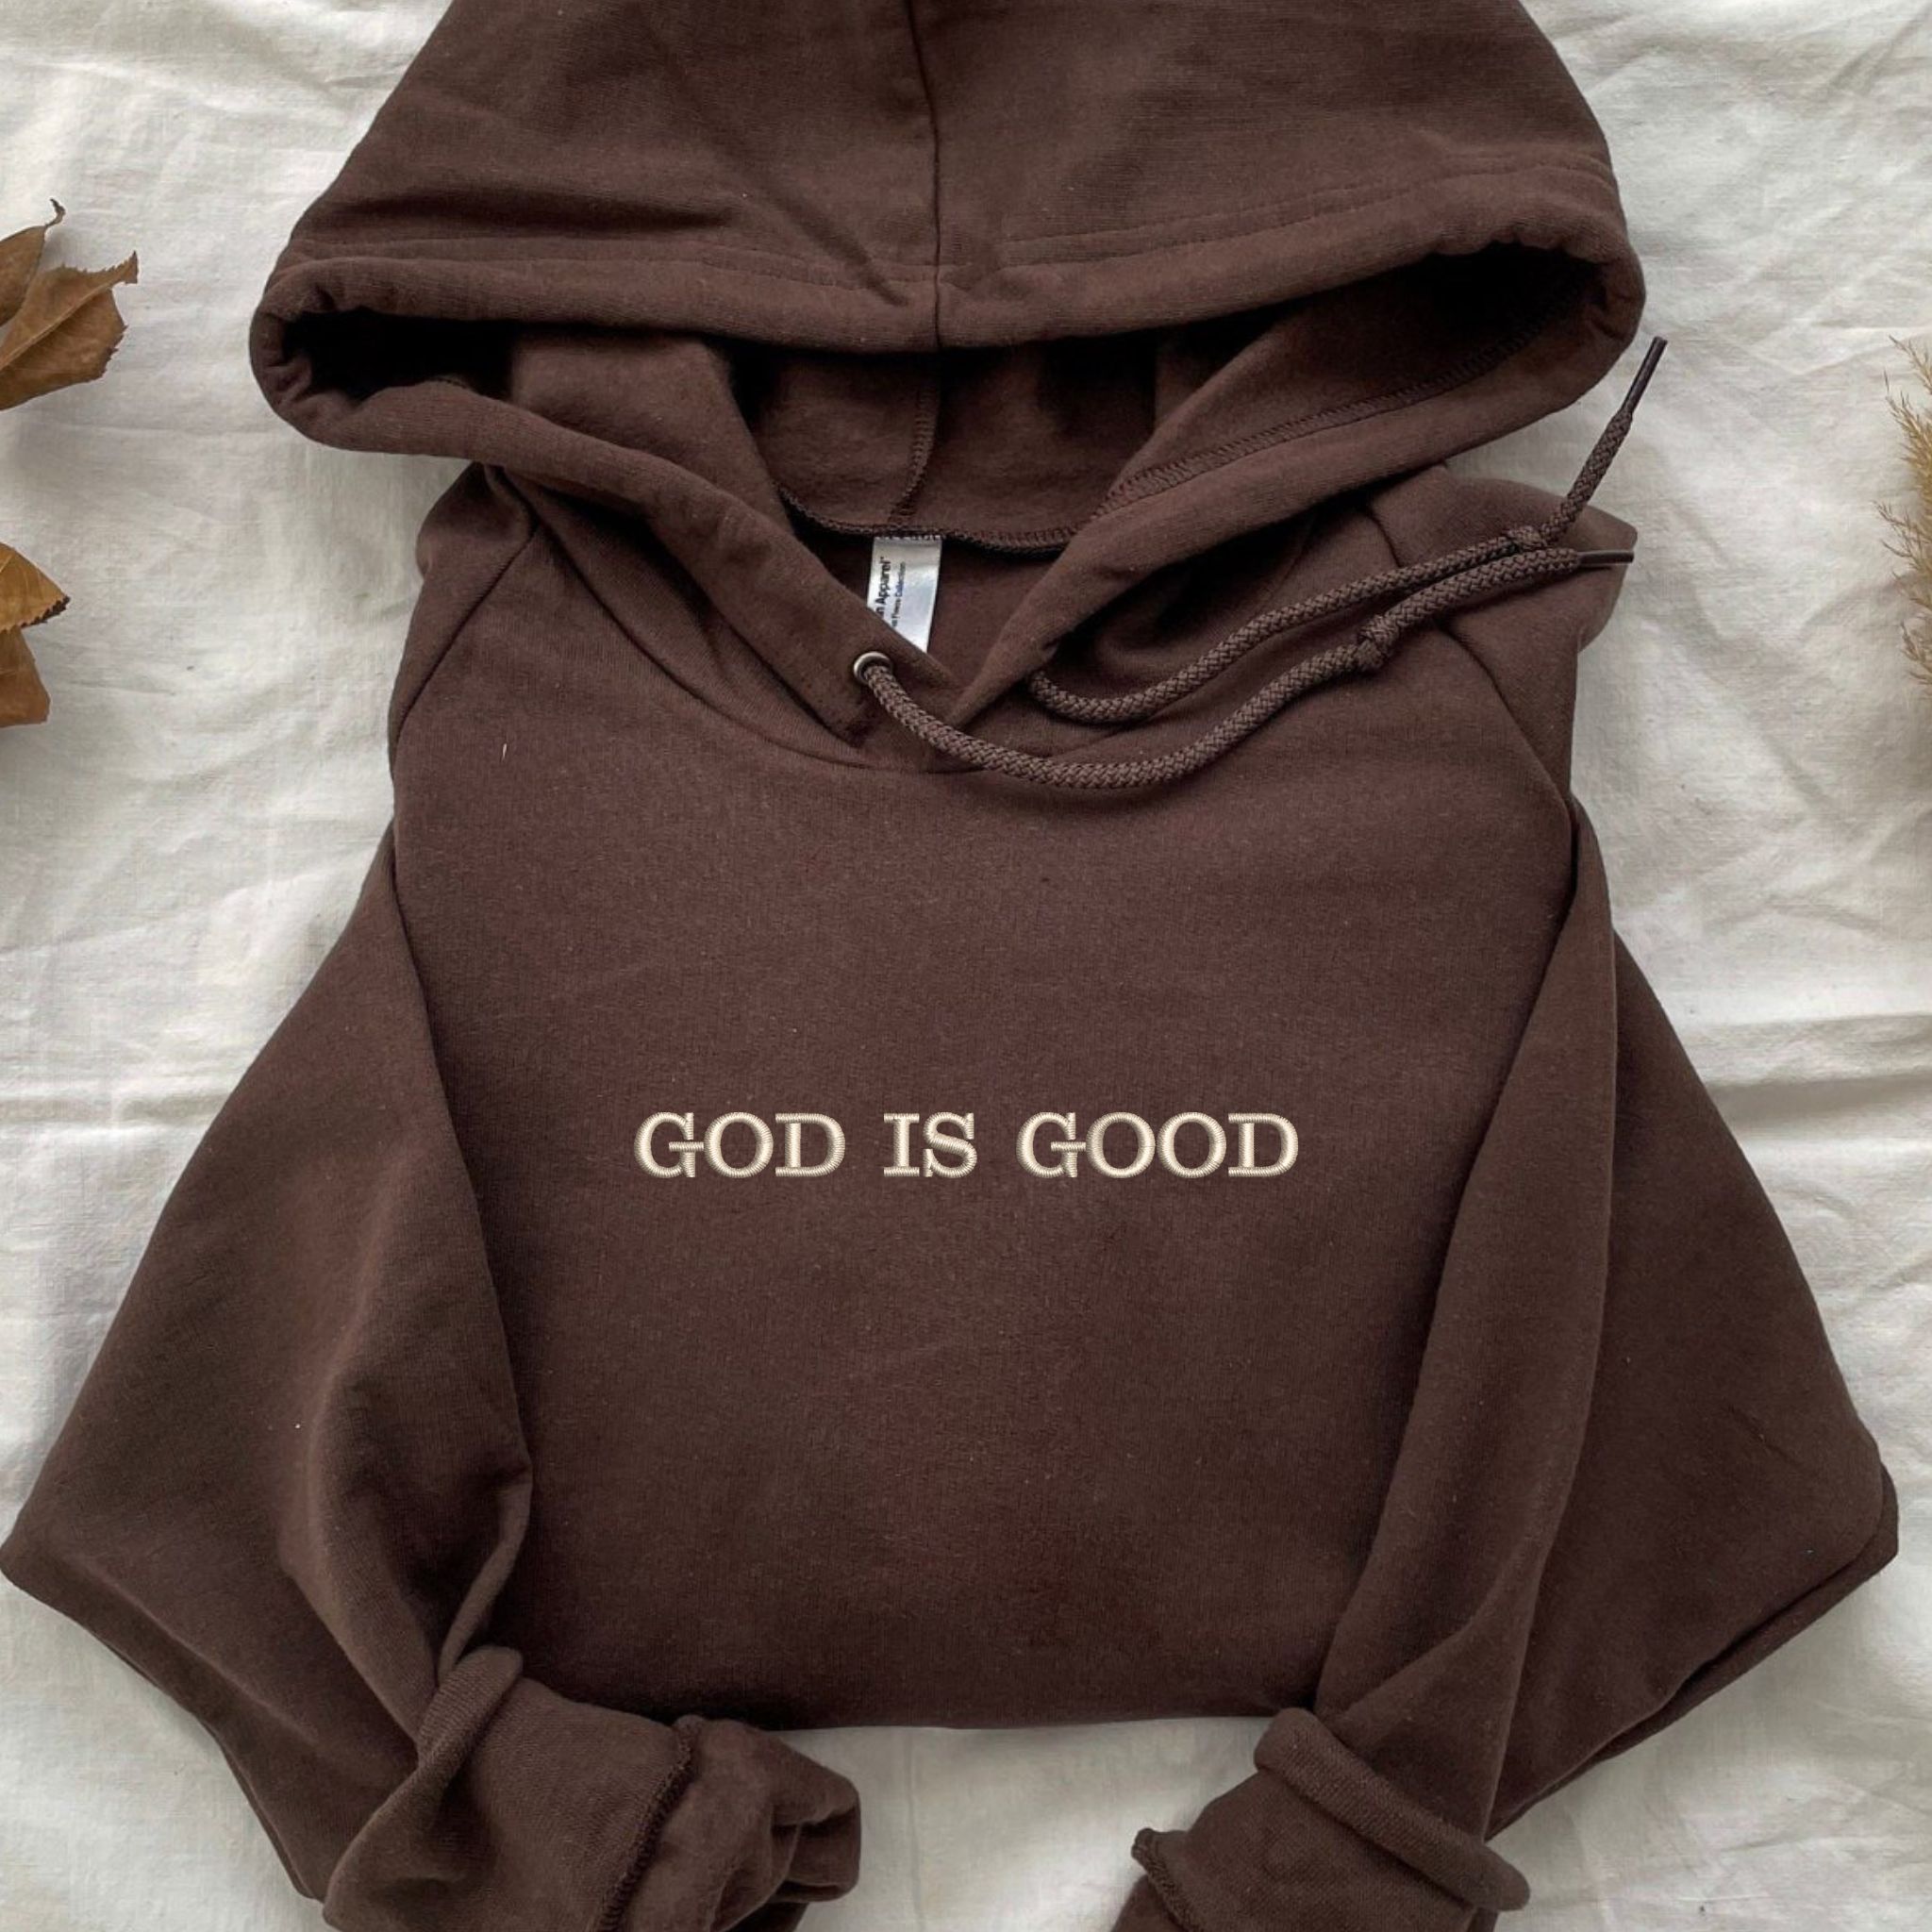 With God Sweatshirts & Hoodies for Sale